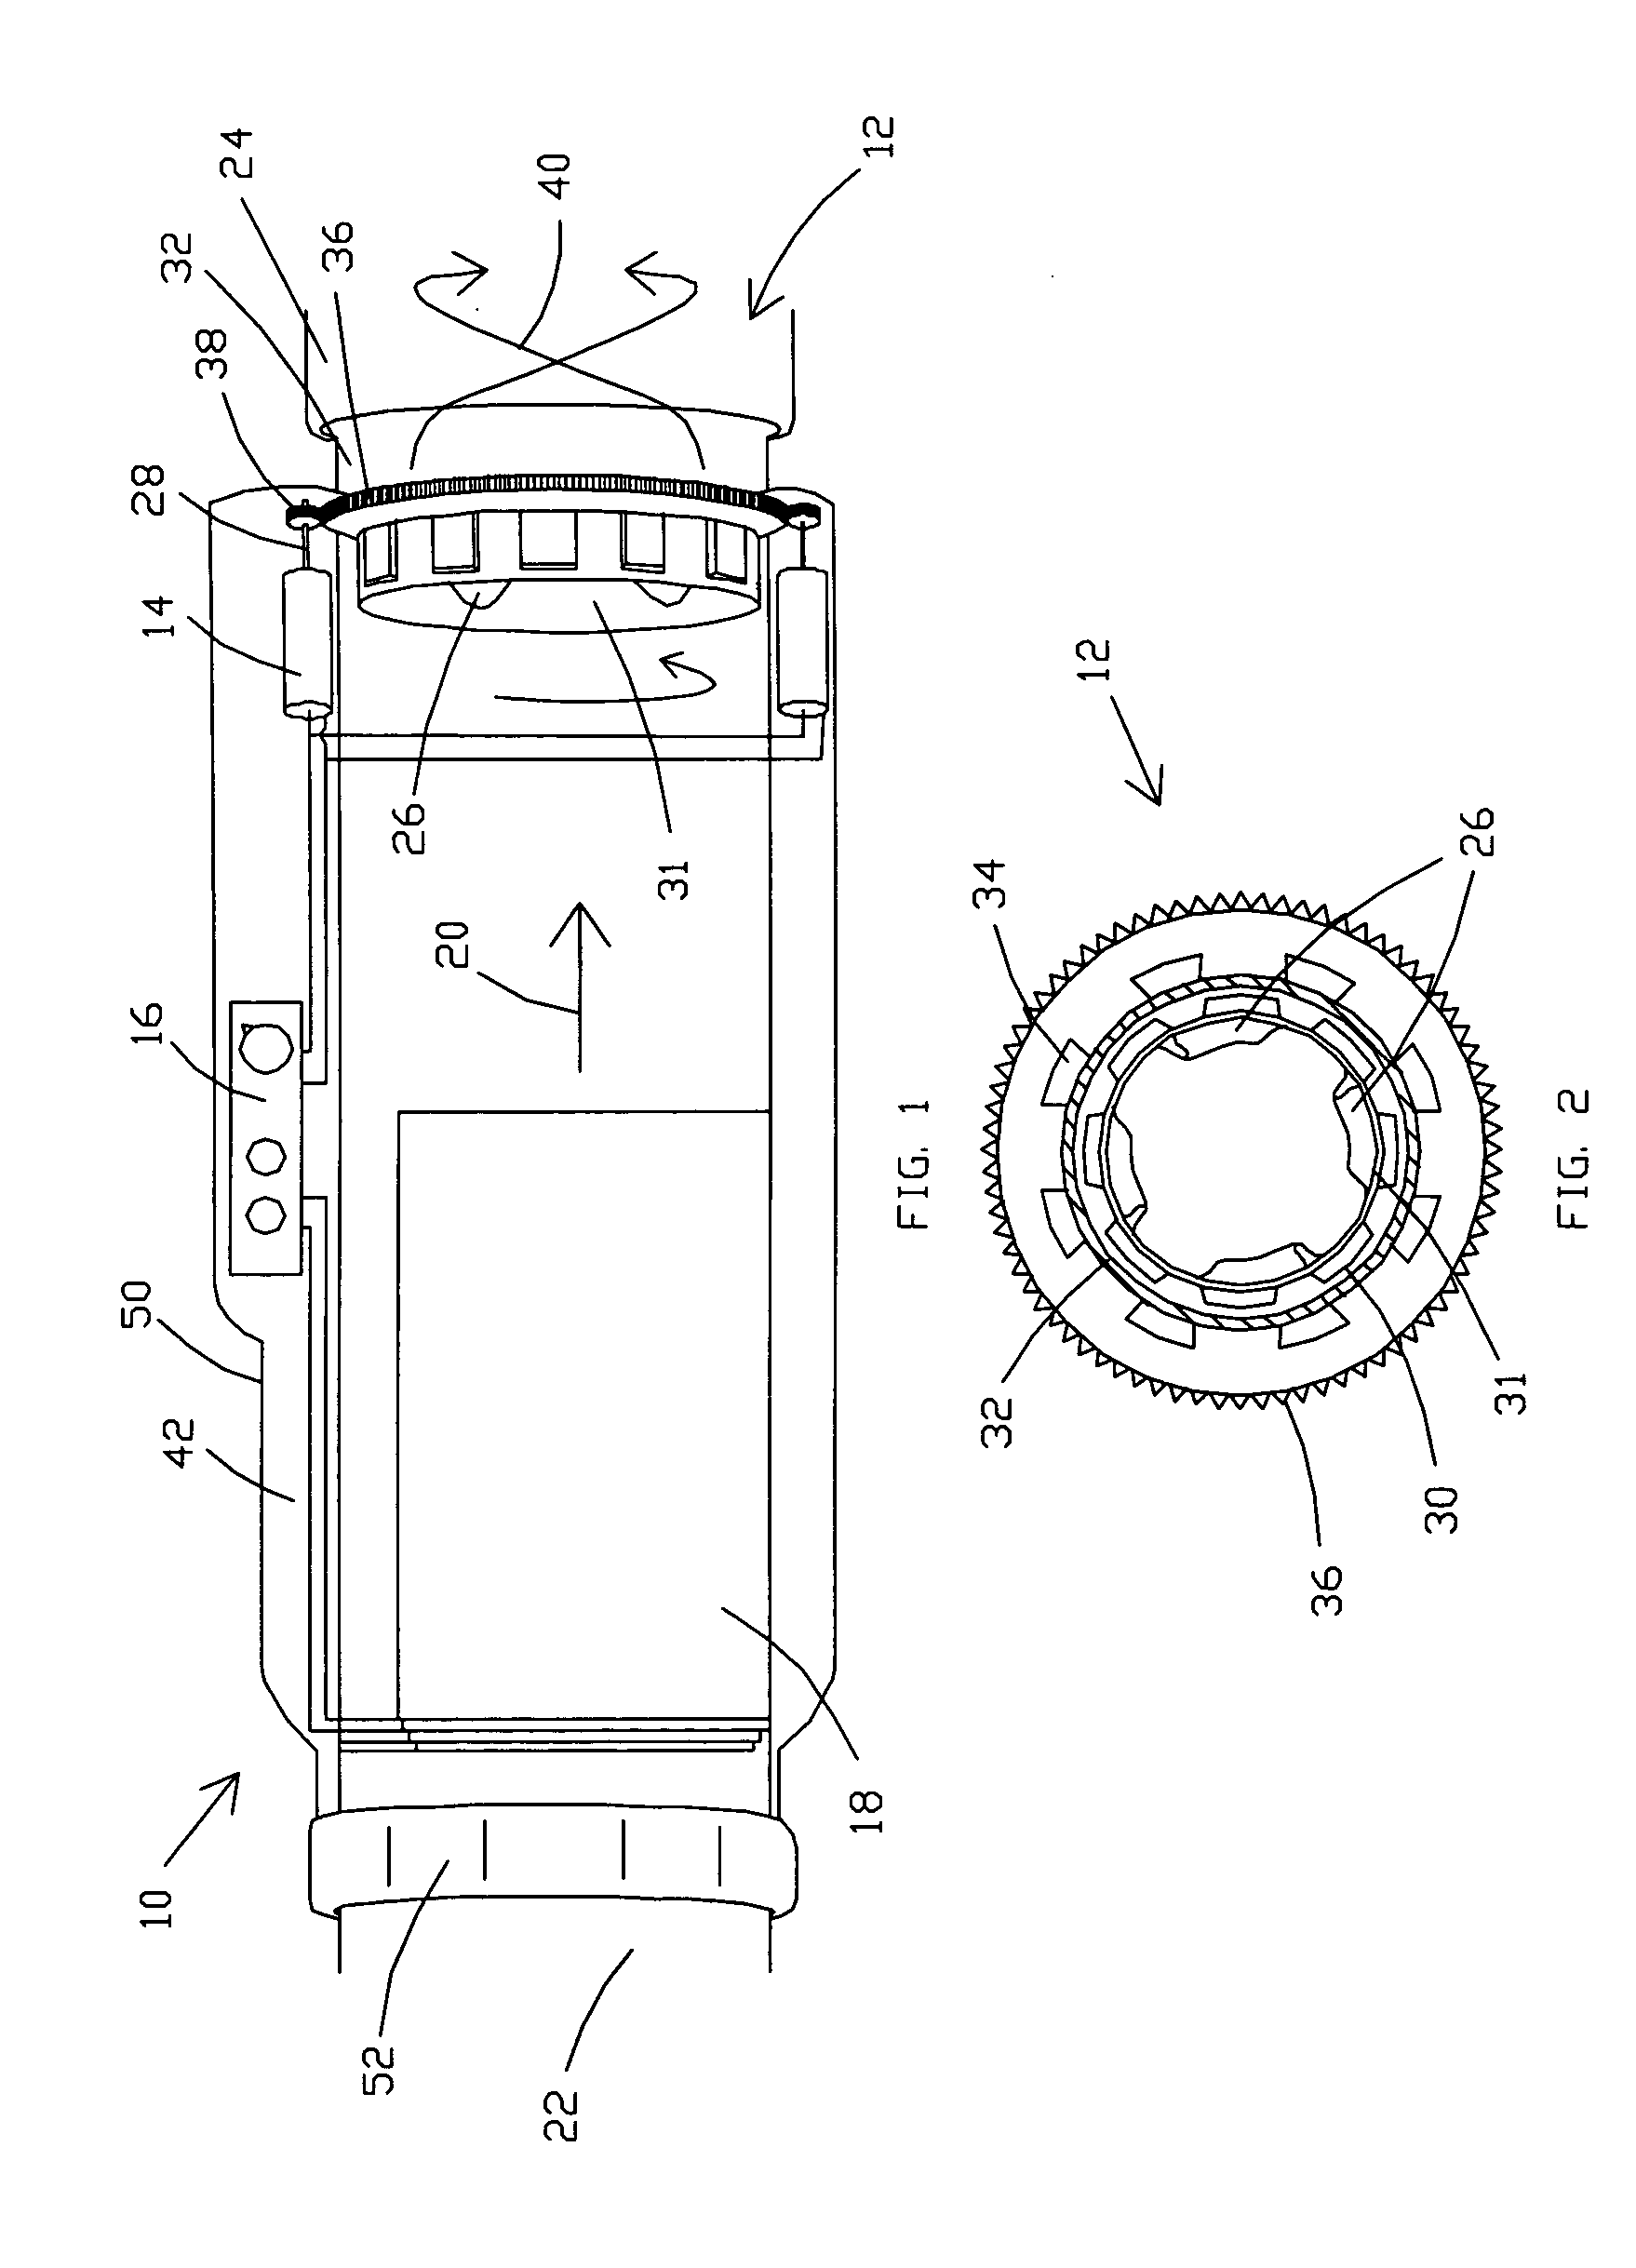 Water treatment turbine apparatus and method